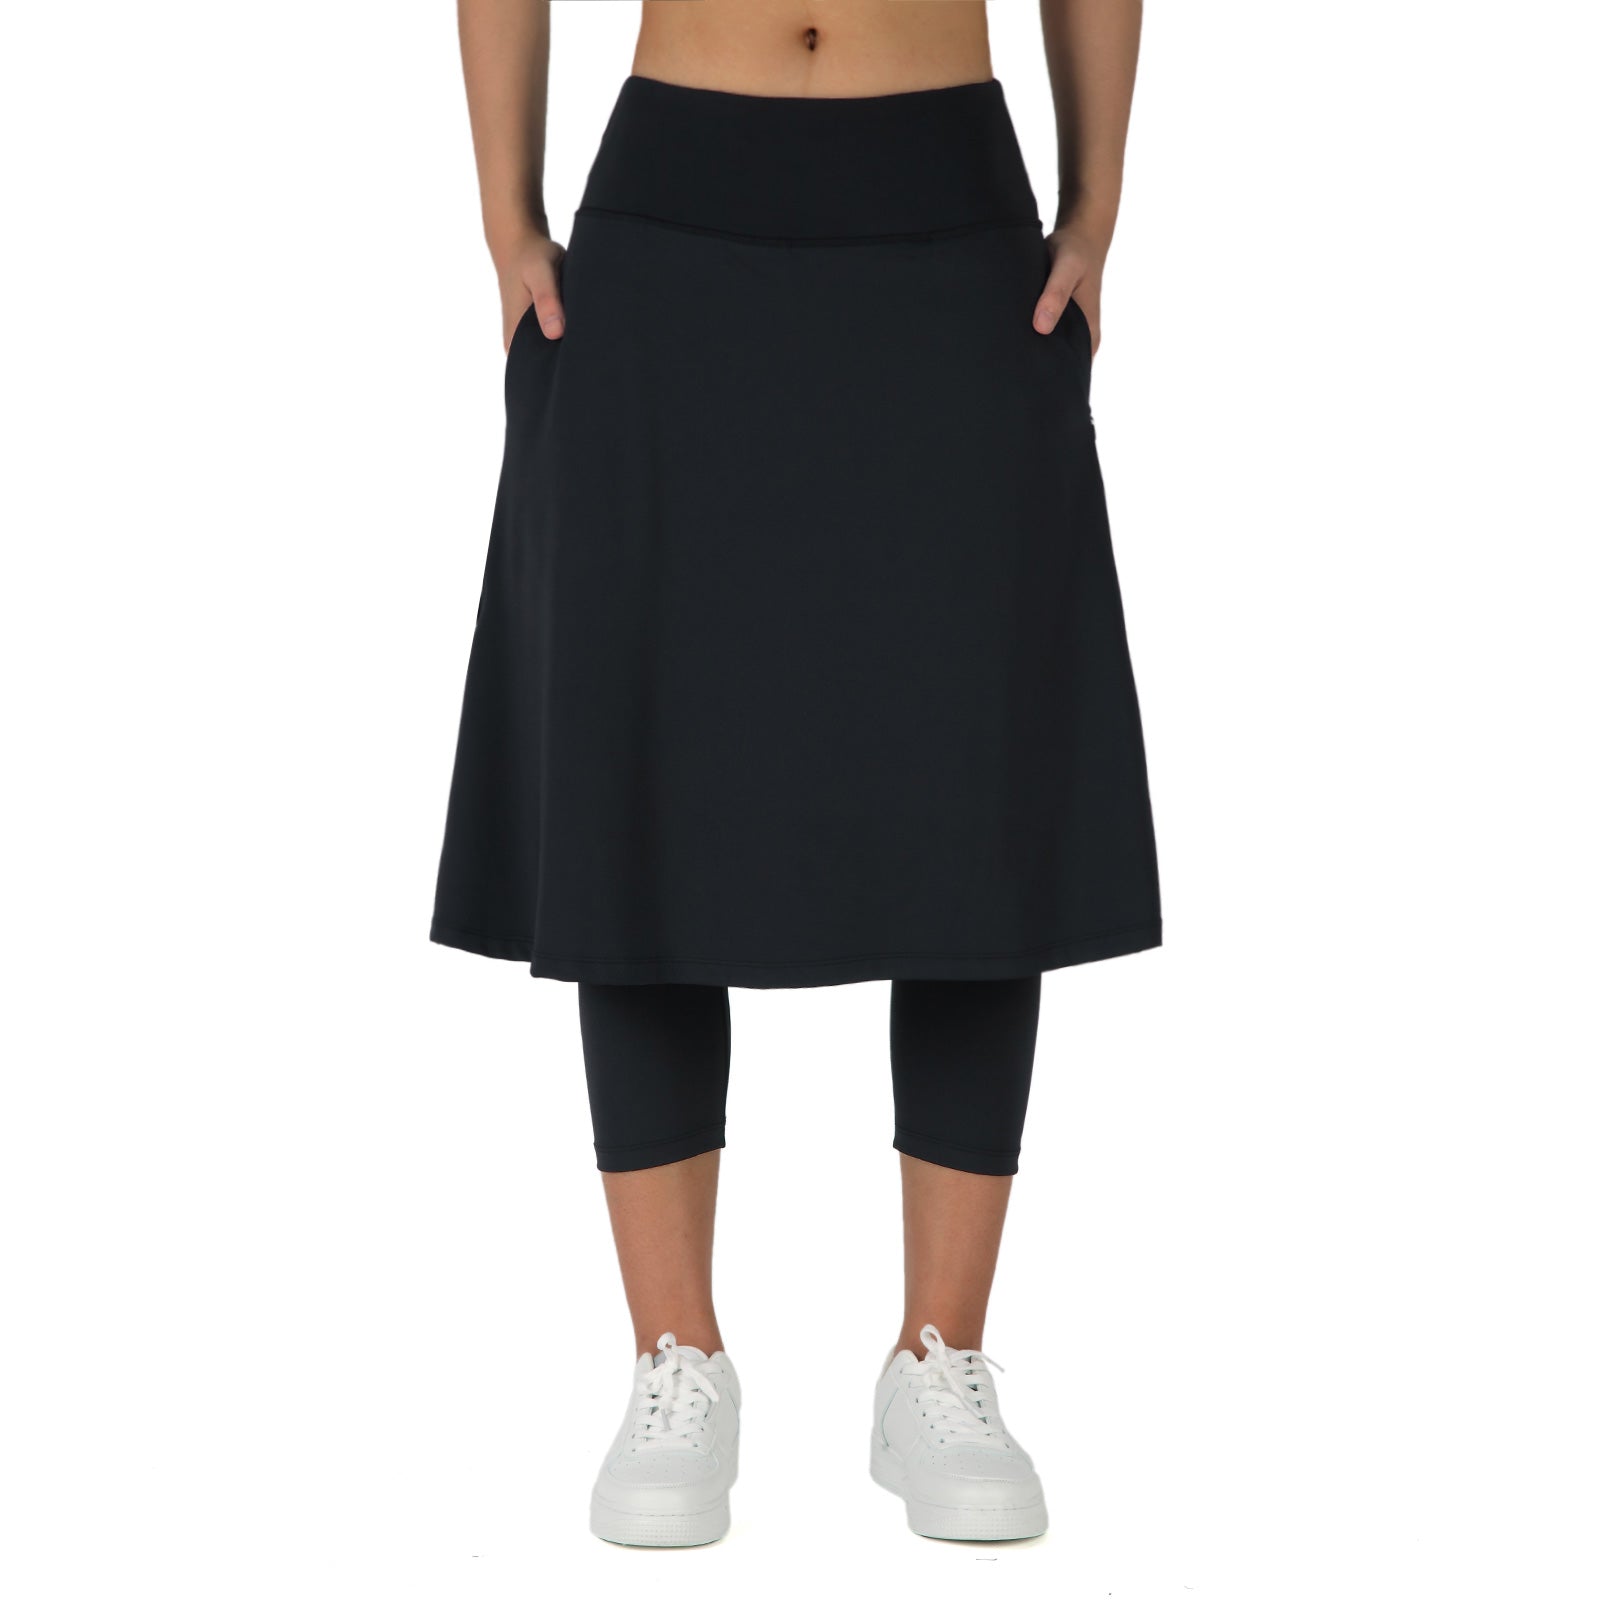 Anivivo Women Long Knee Length Skirt with Capris Leggings, Skirted Leegings  with High Waisted Zipper Pockets